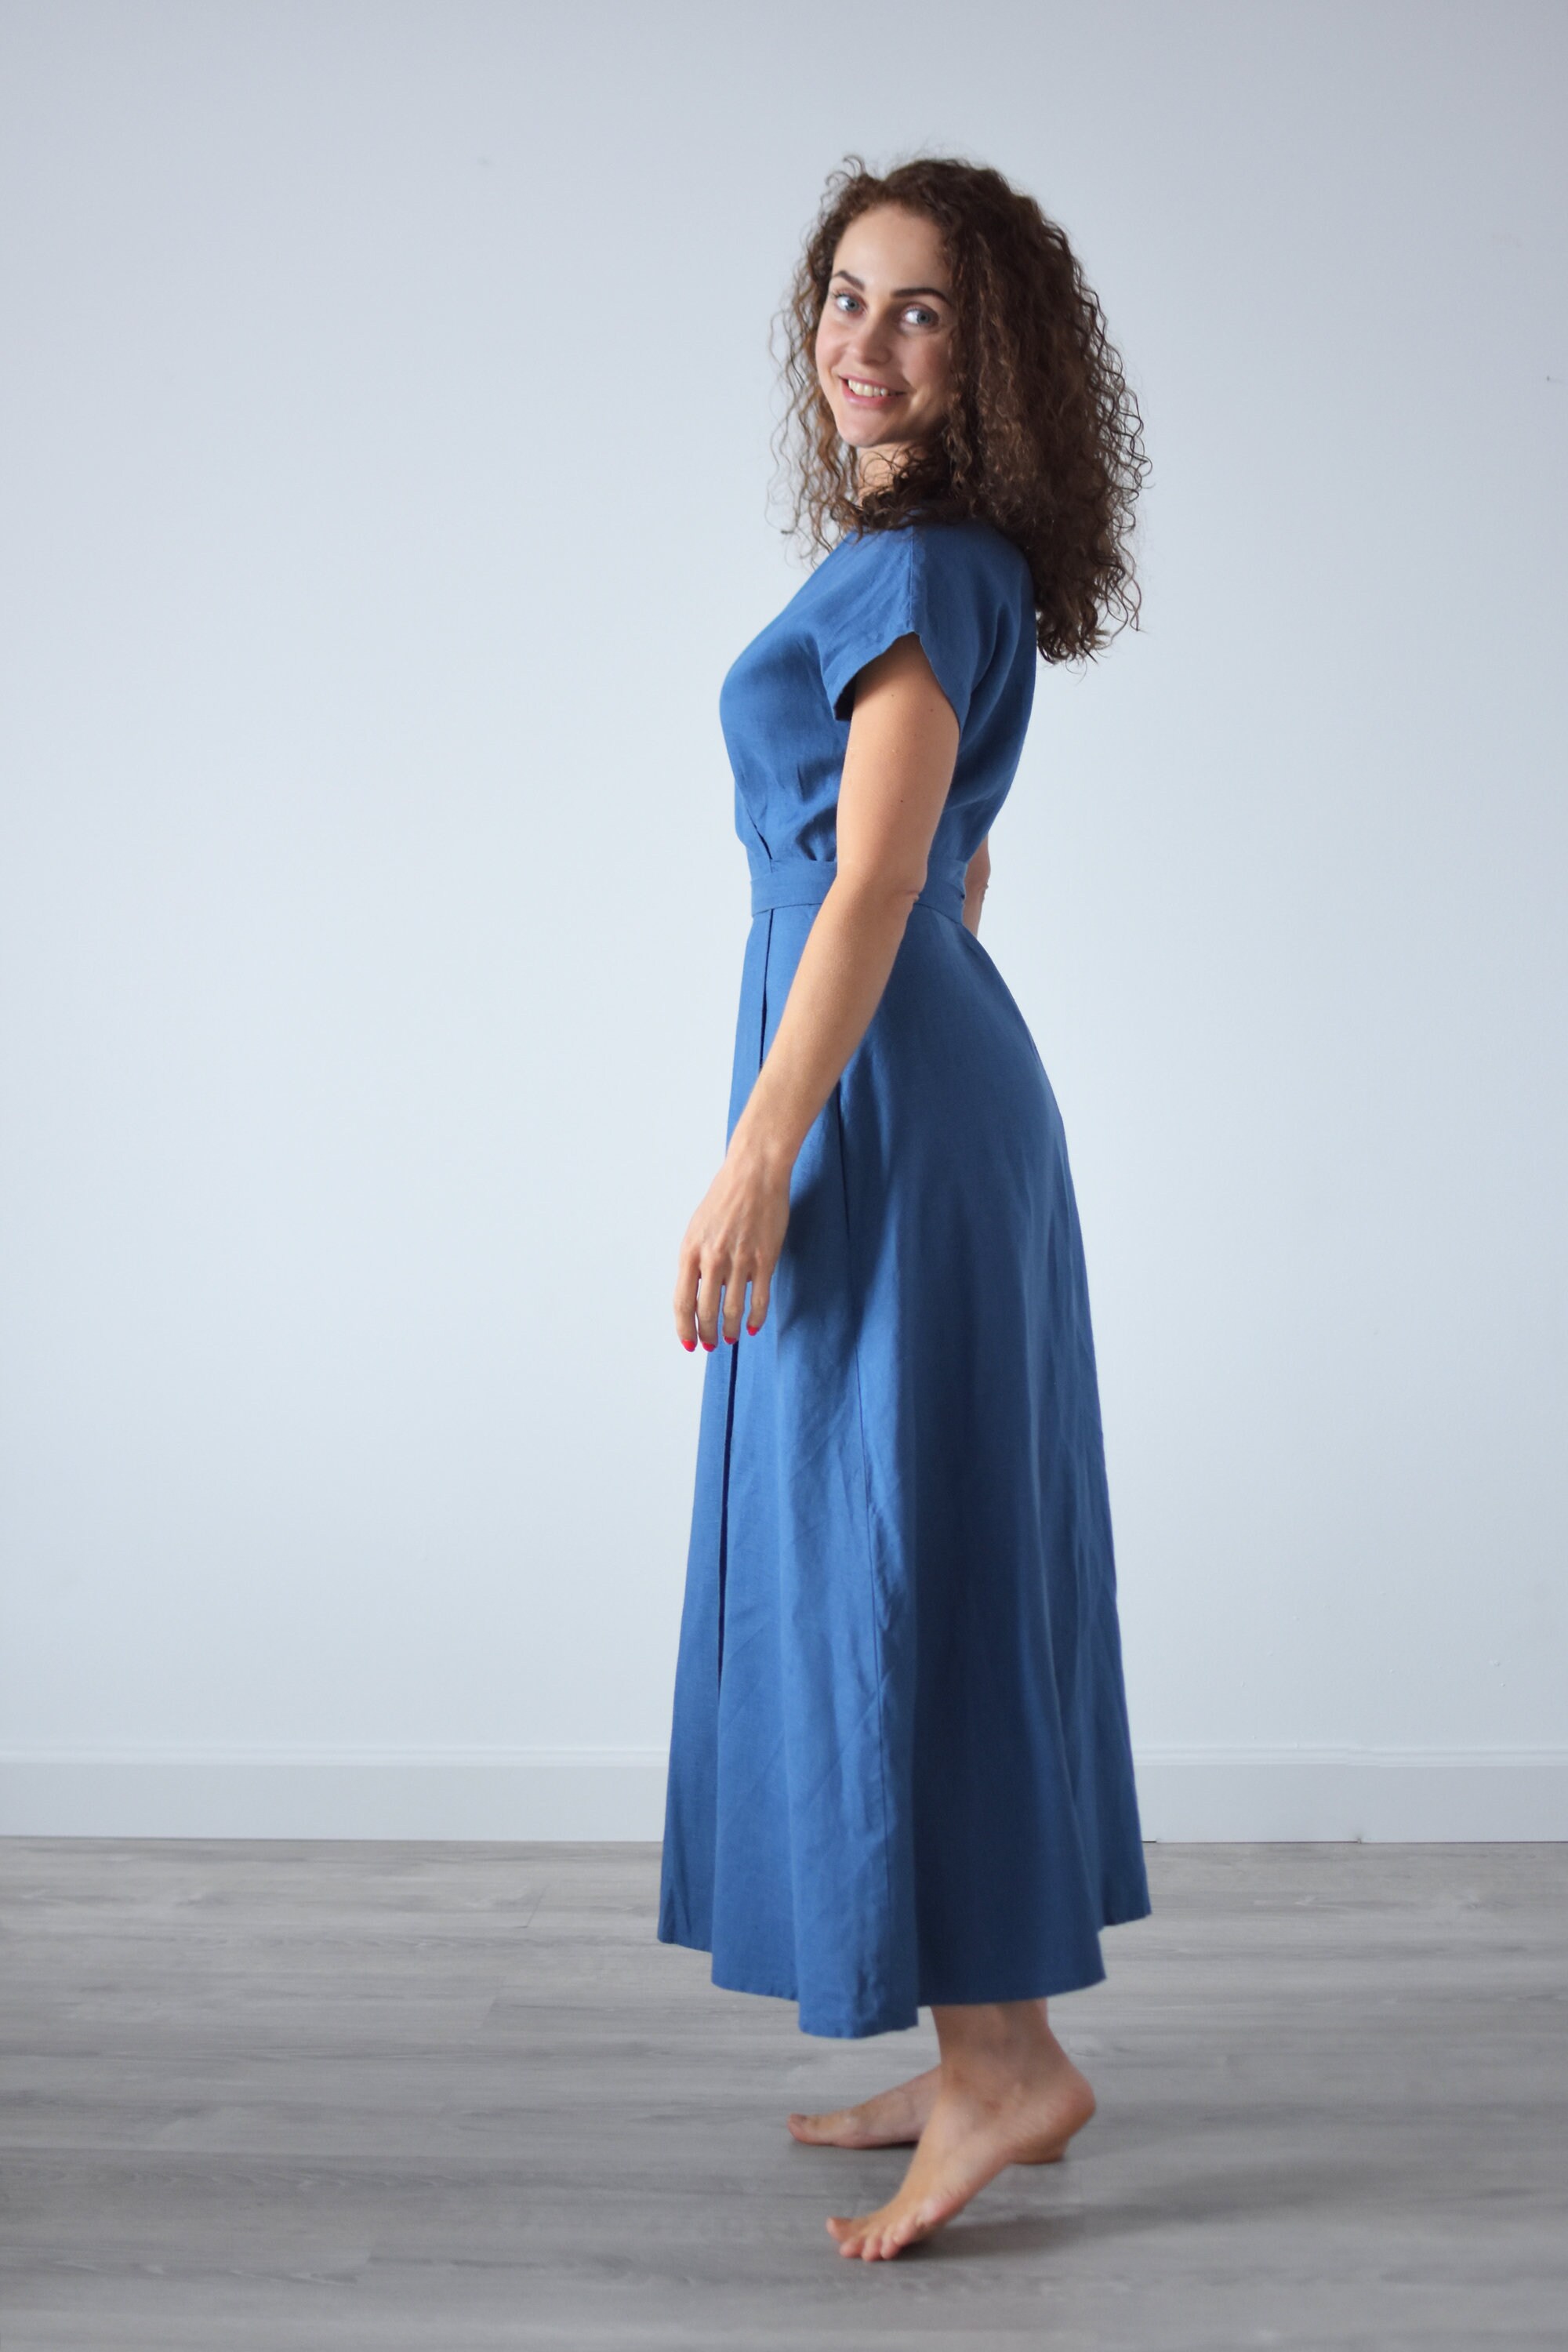 Linen Wrap Dress / Blue Linen Maxi Dress / Ankle Dress / Linen | Etsy